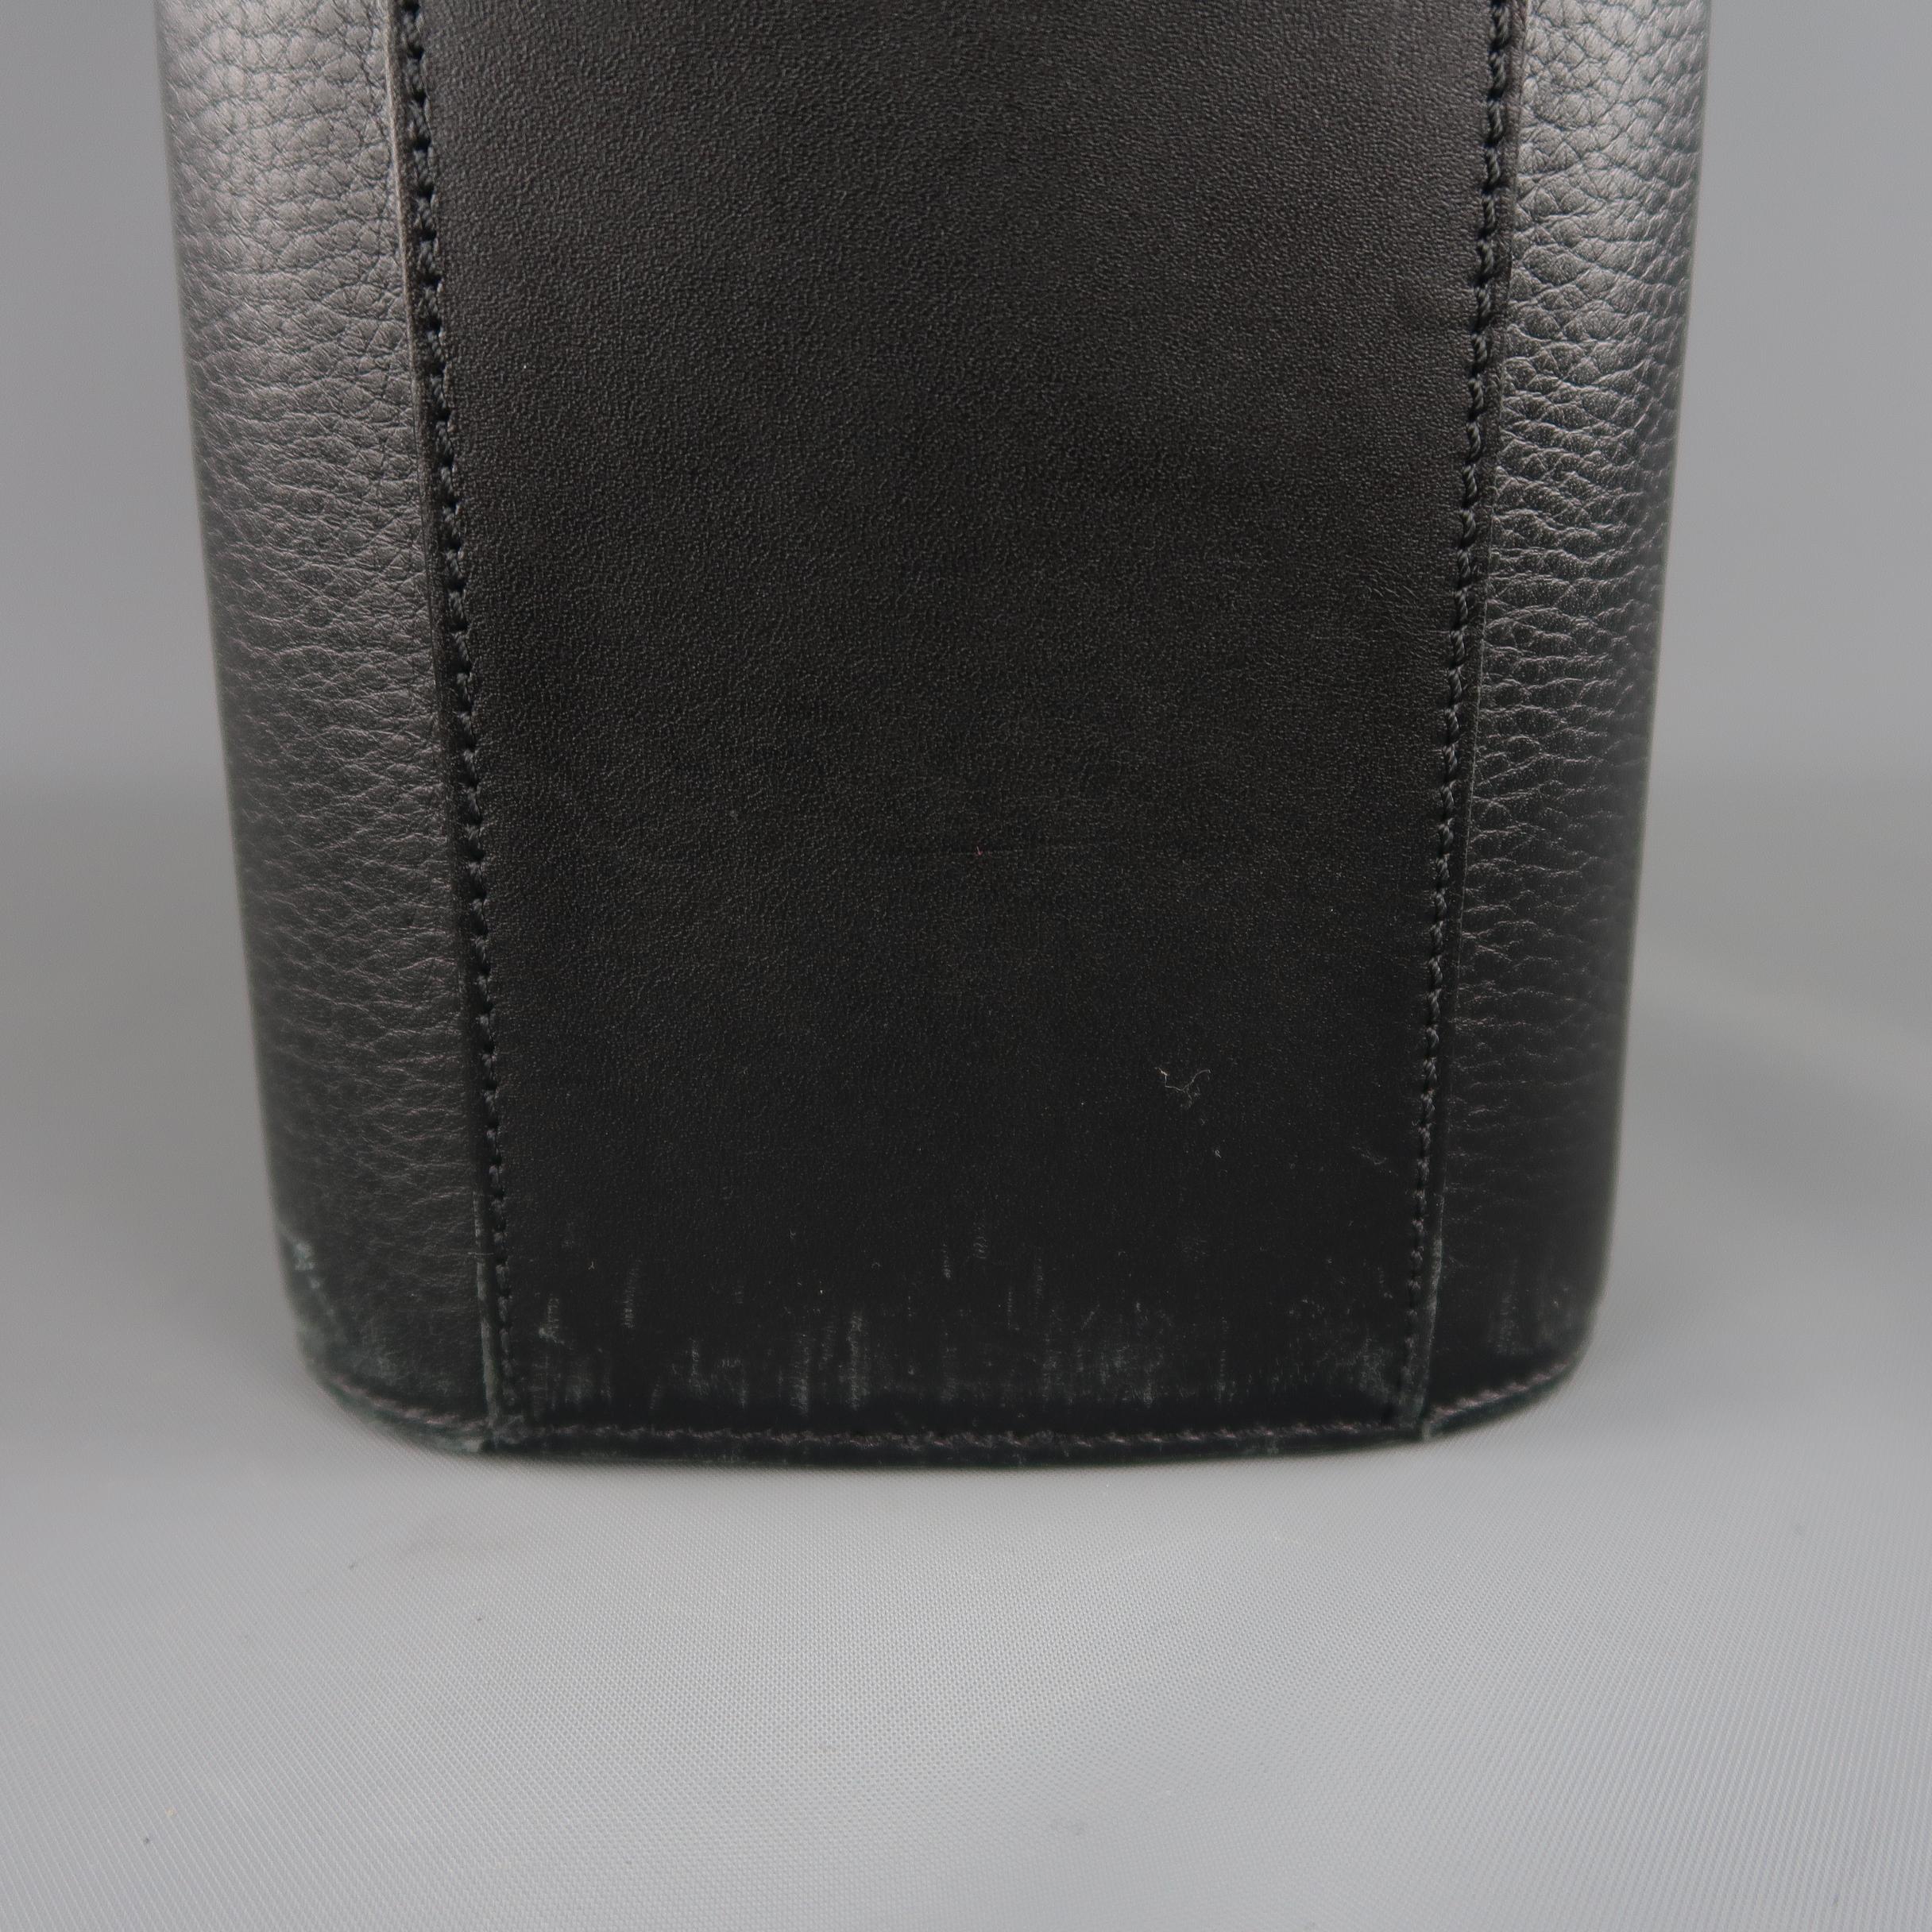 Cartier Vintage Black Textured Leather Top Handles Pasha Briefcase 3